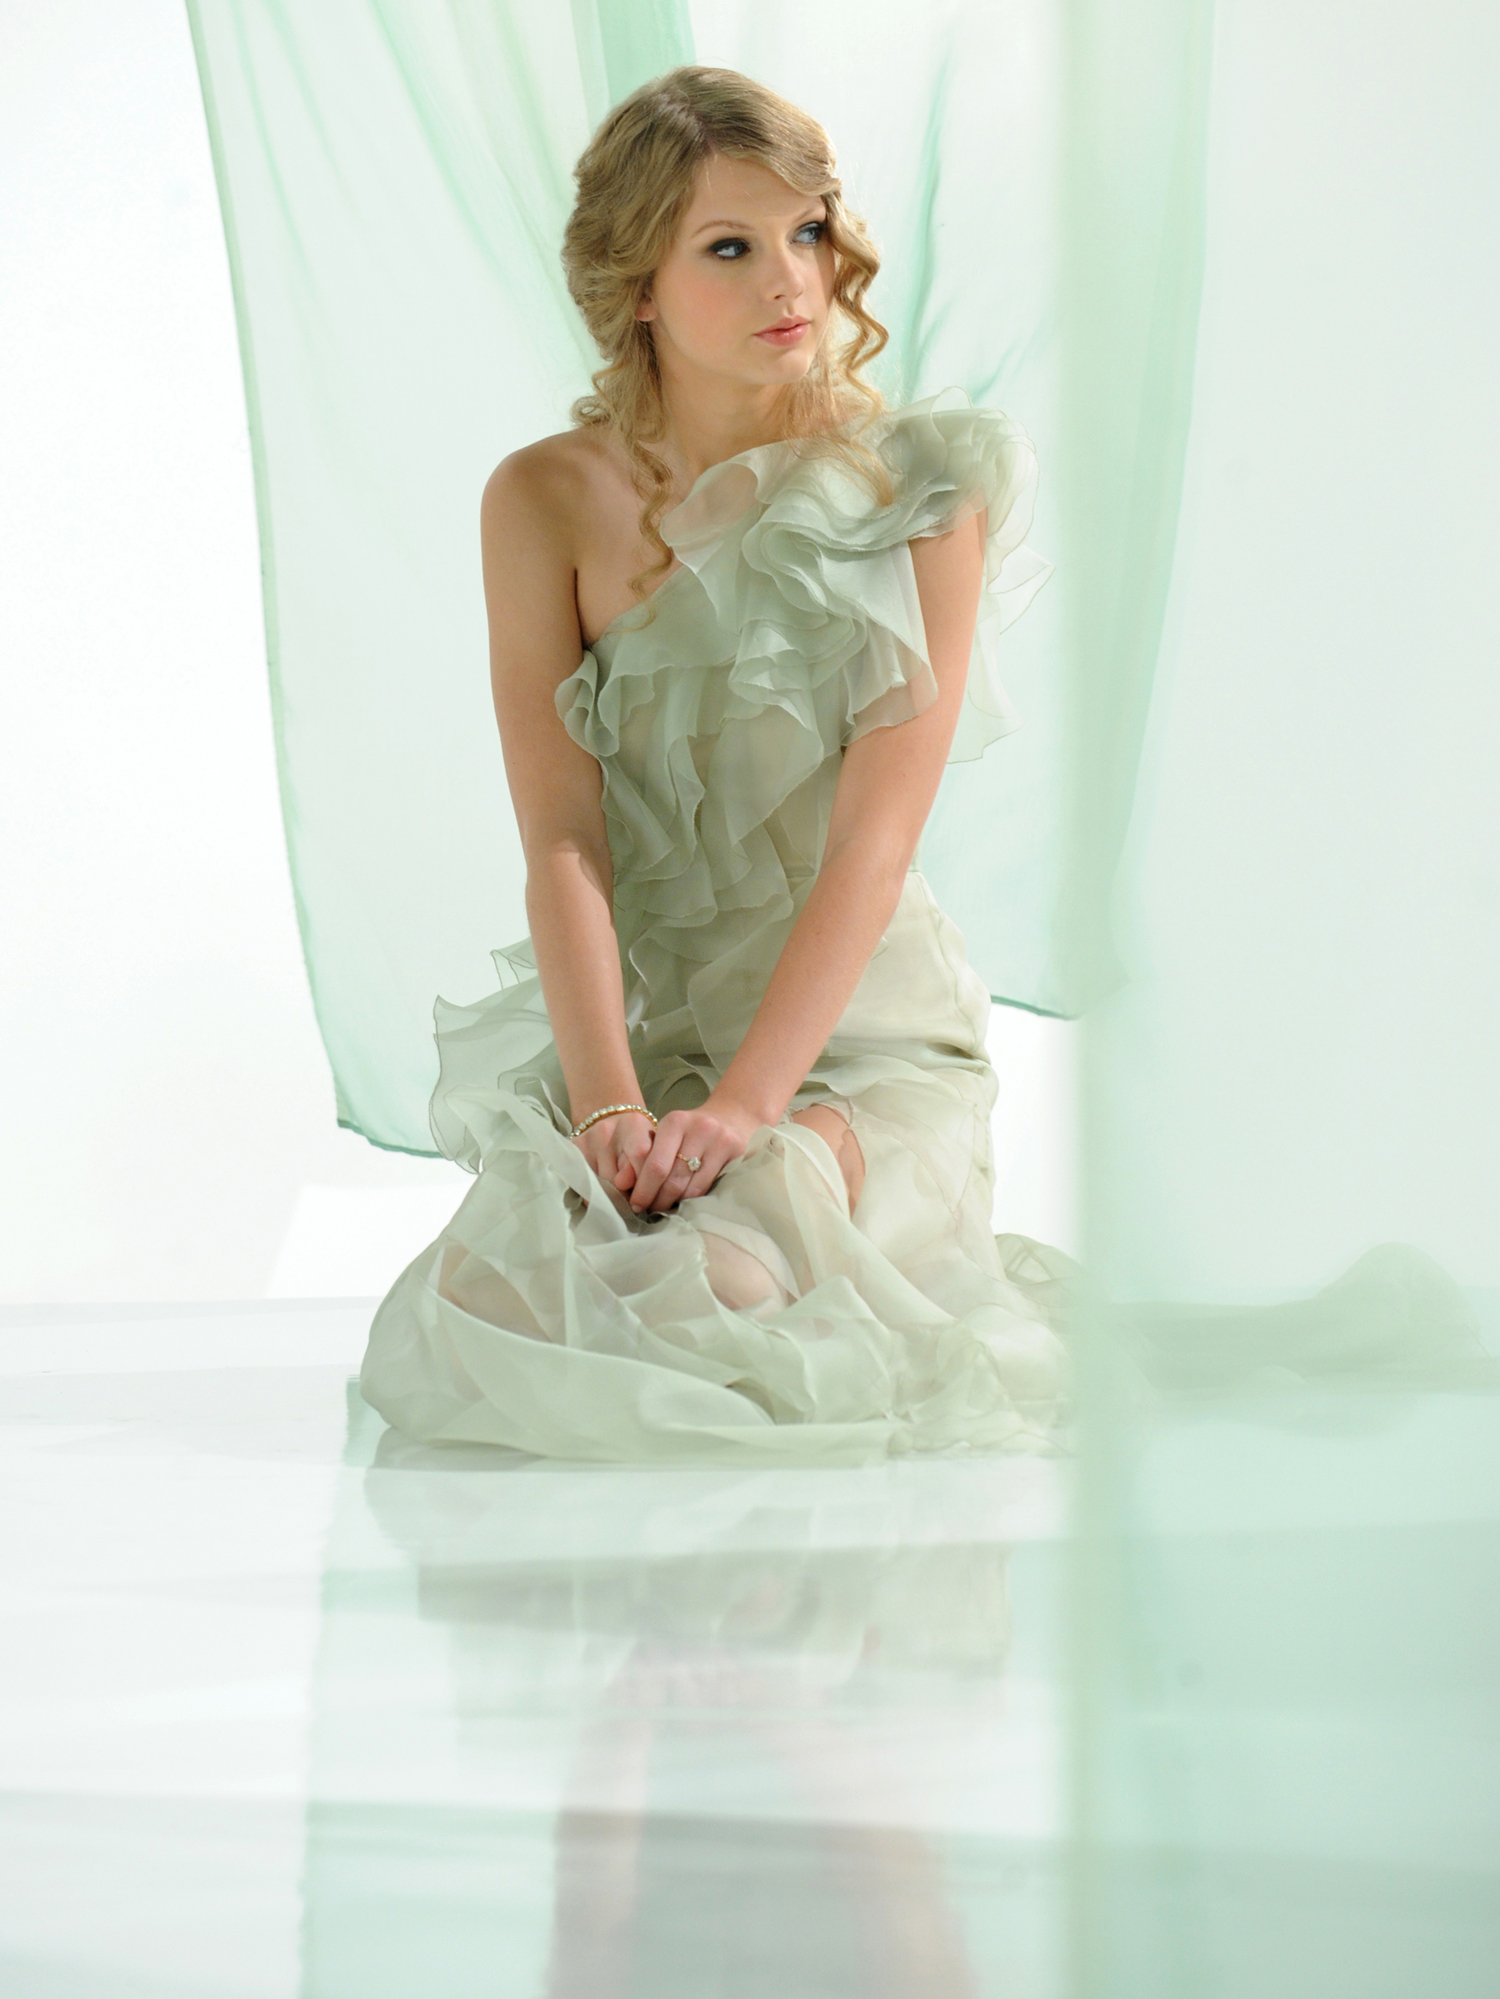 People 1500x1999 Taylor Swift women singer blonde blue eyes long hair curly hair kneeling reflection green dress looking away